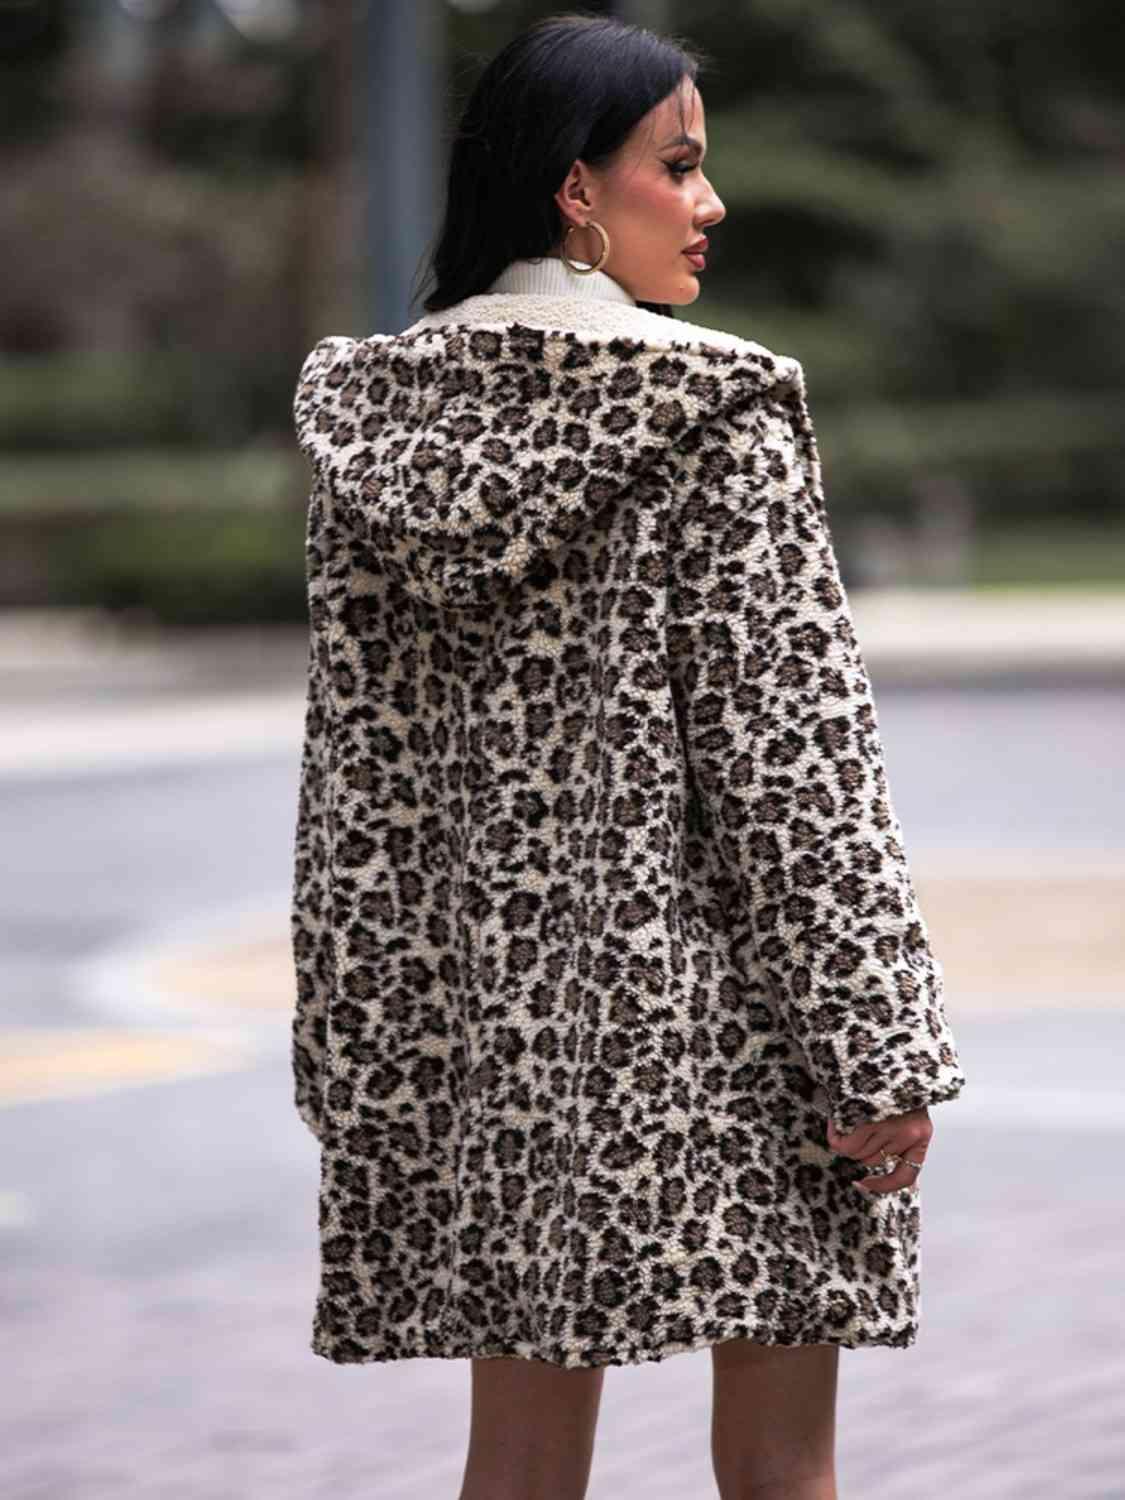 a woman in a leopard print coat standing on a sidewalk